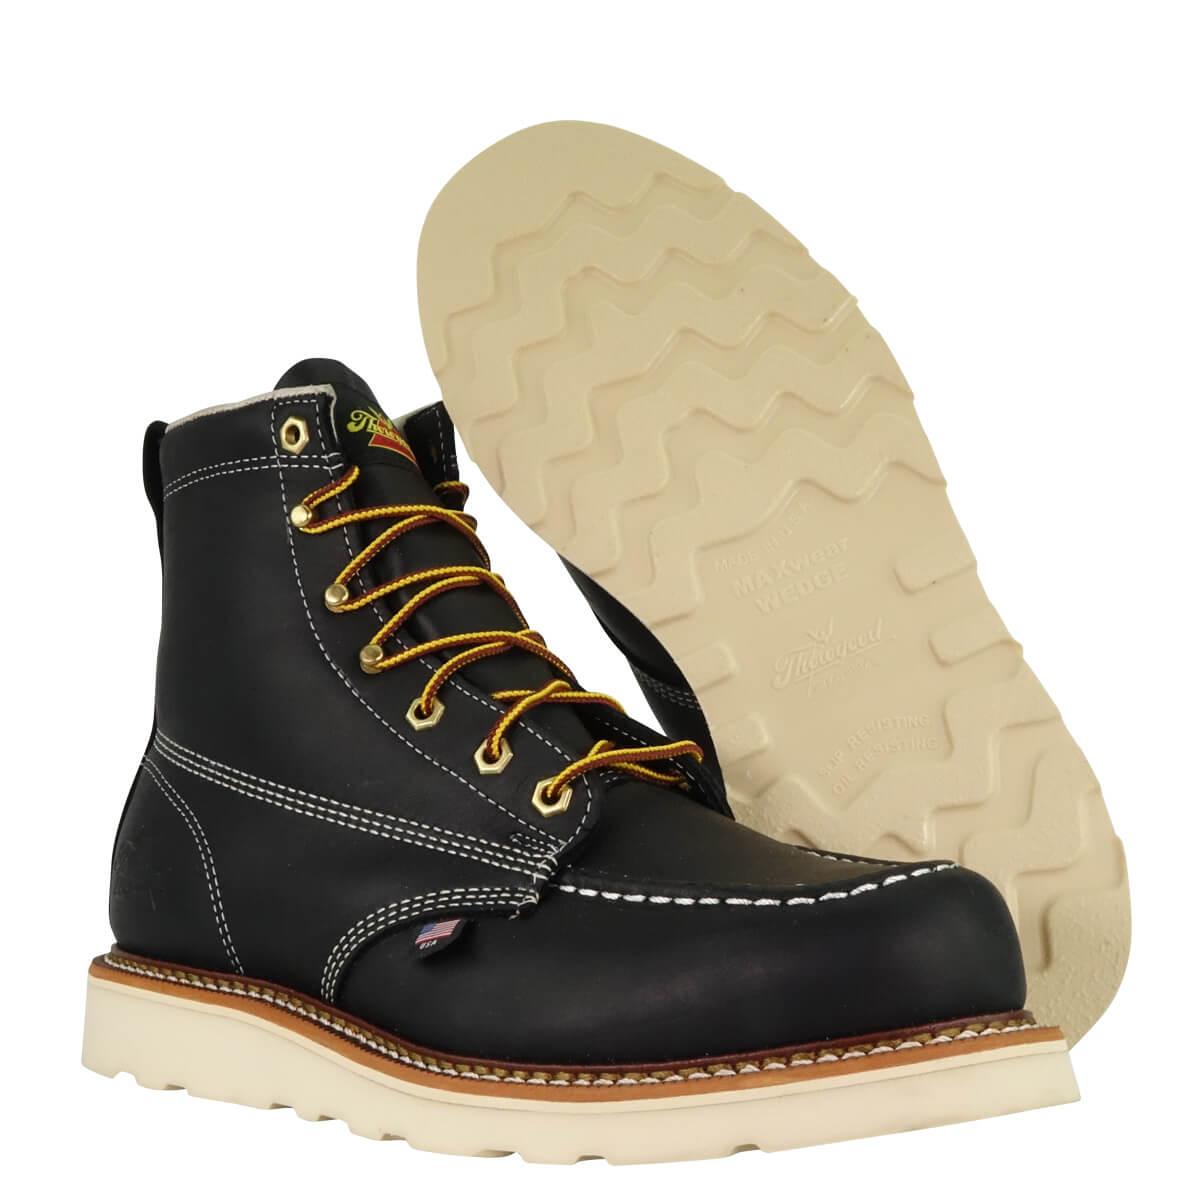 American Heritage - 6" Black Moc Toe - MAXwear Wedge (Soft Toe)